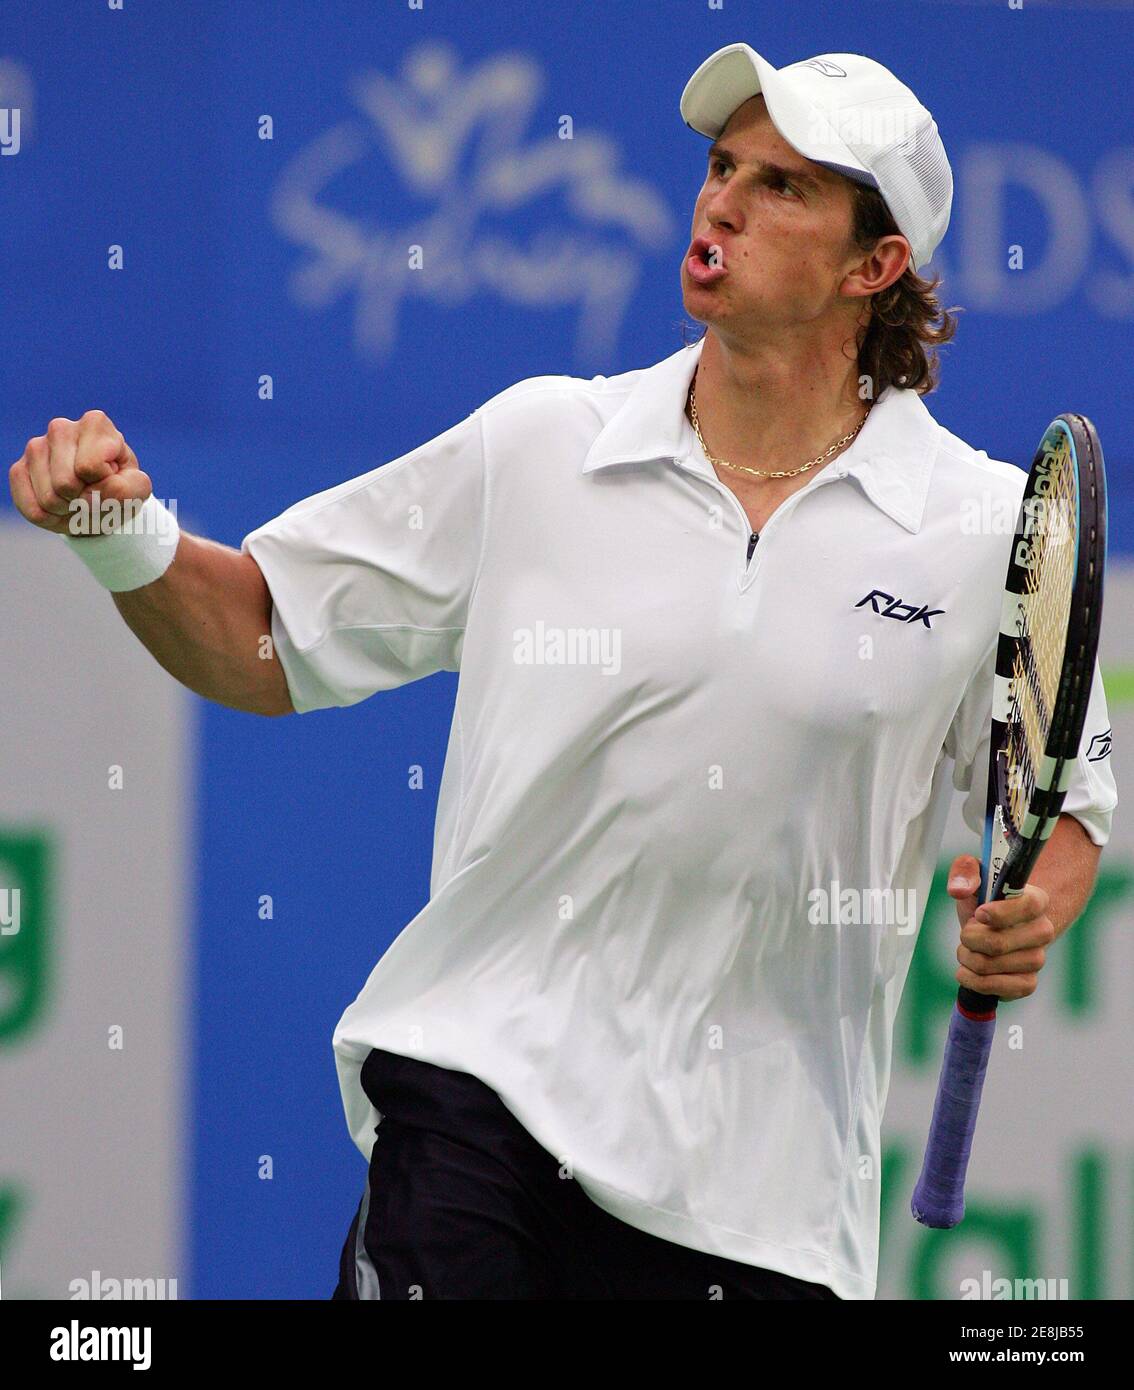 Russlands Igor Andreev drängt sich in seinem Halbfinale gegen Andreas Seppi in Italien am Sydney International Tennisturnier 13. Januar 2006. Andreev schlagen Seppi 6-2 2-6 6-2. REUTERS / Willen Burgess Stockfoto